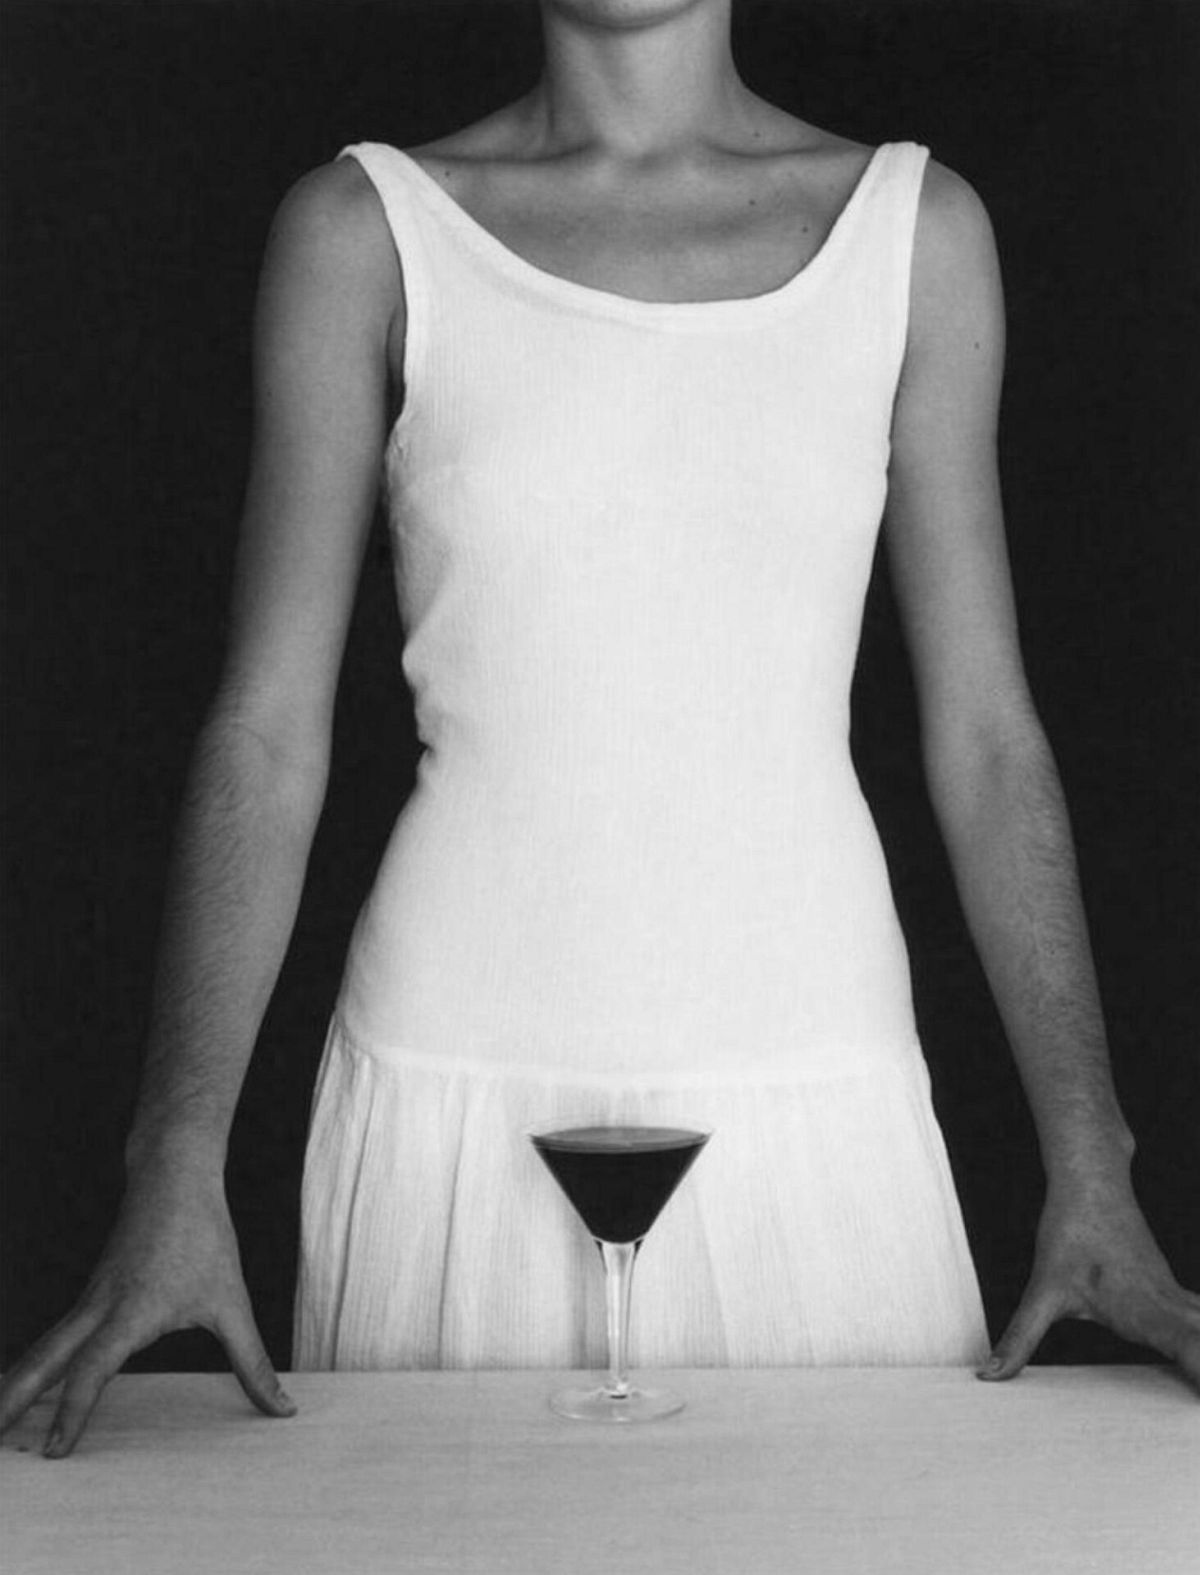 Chema MadozUntitled (Dress and Wine), 1985